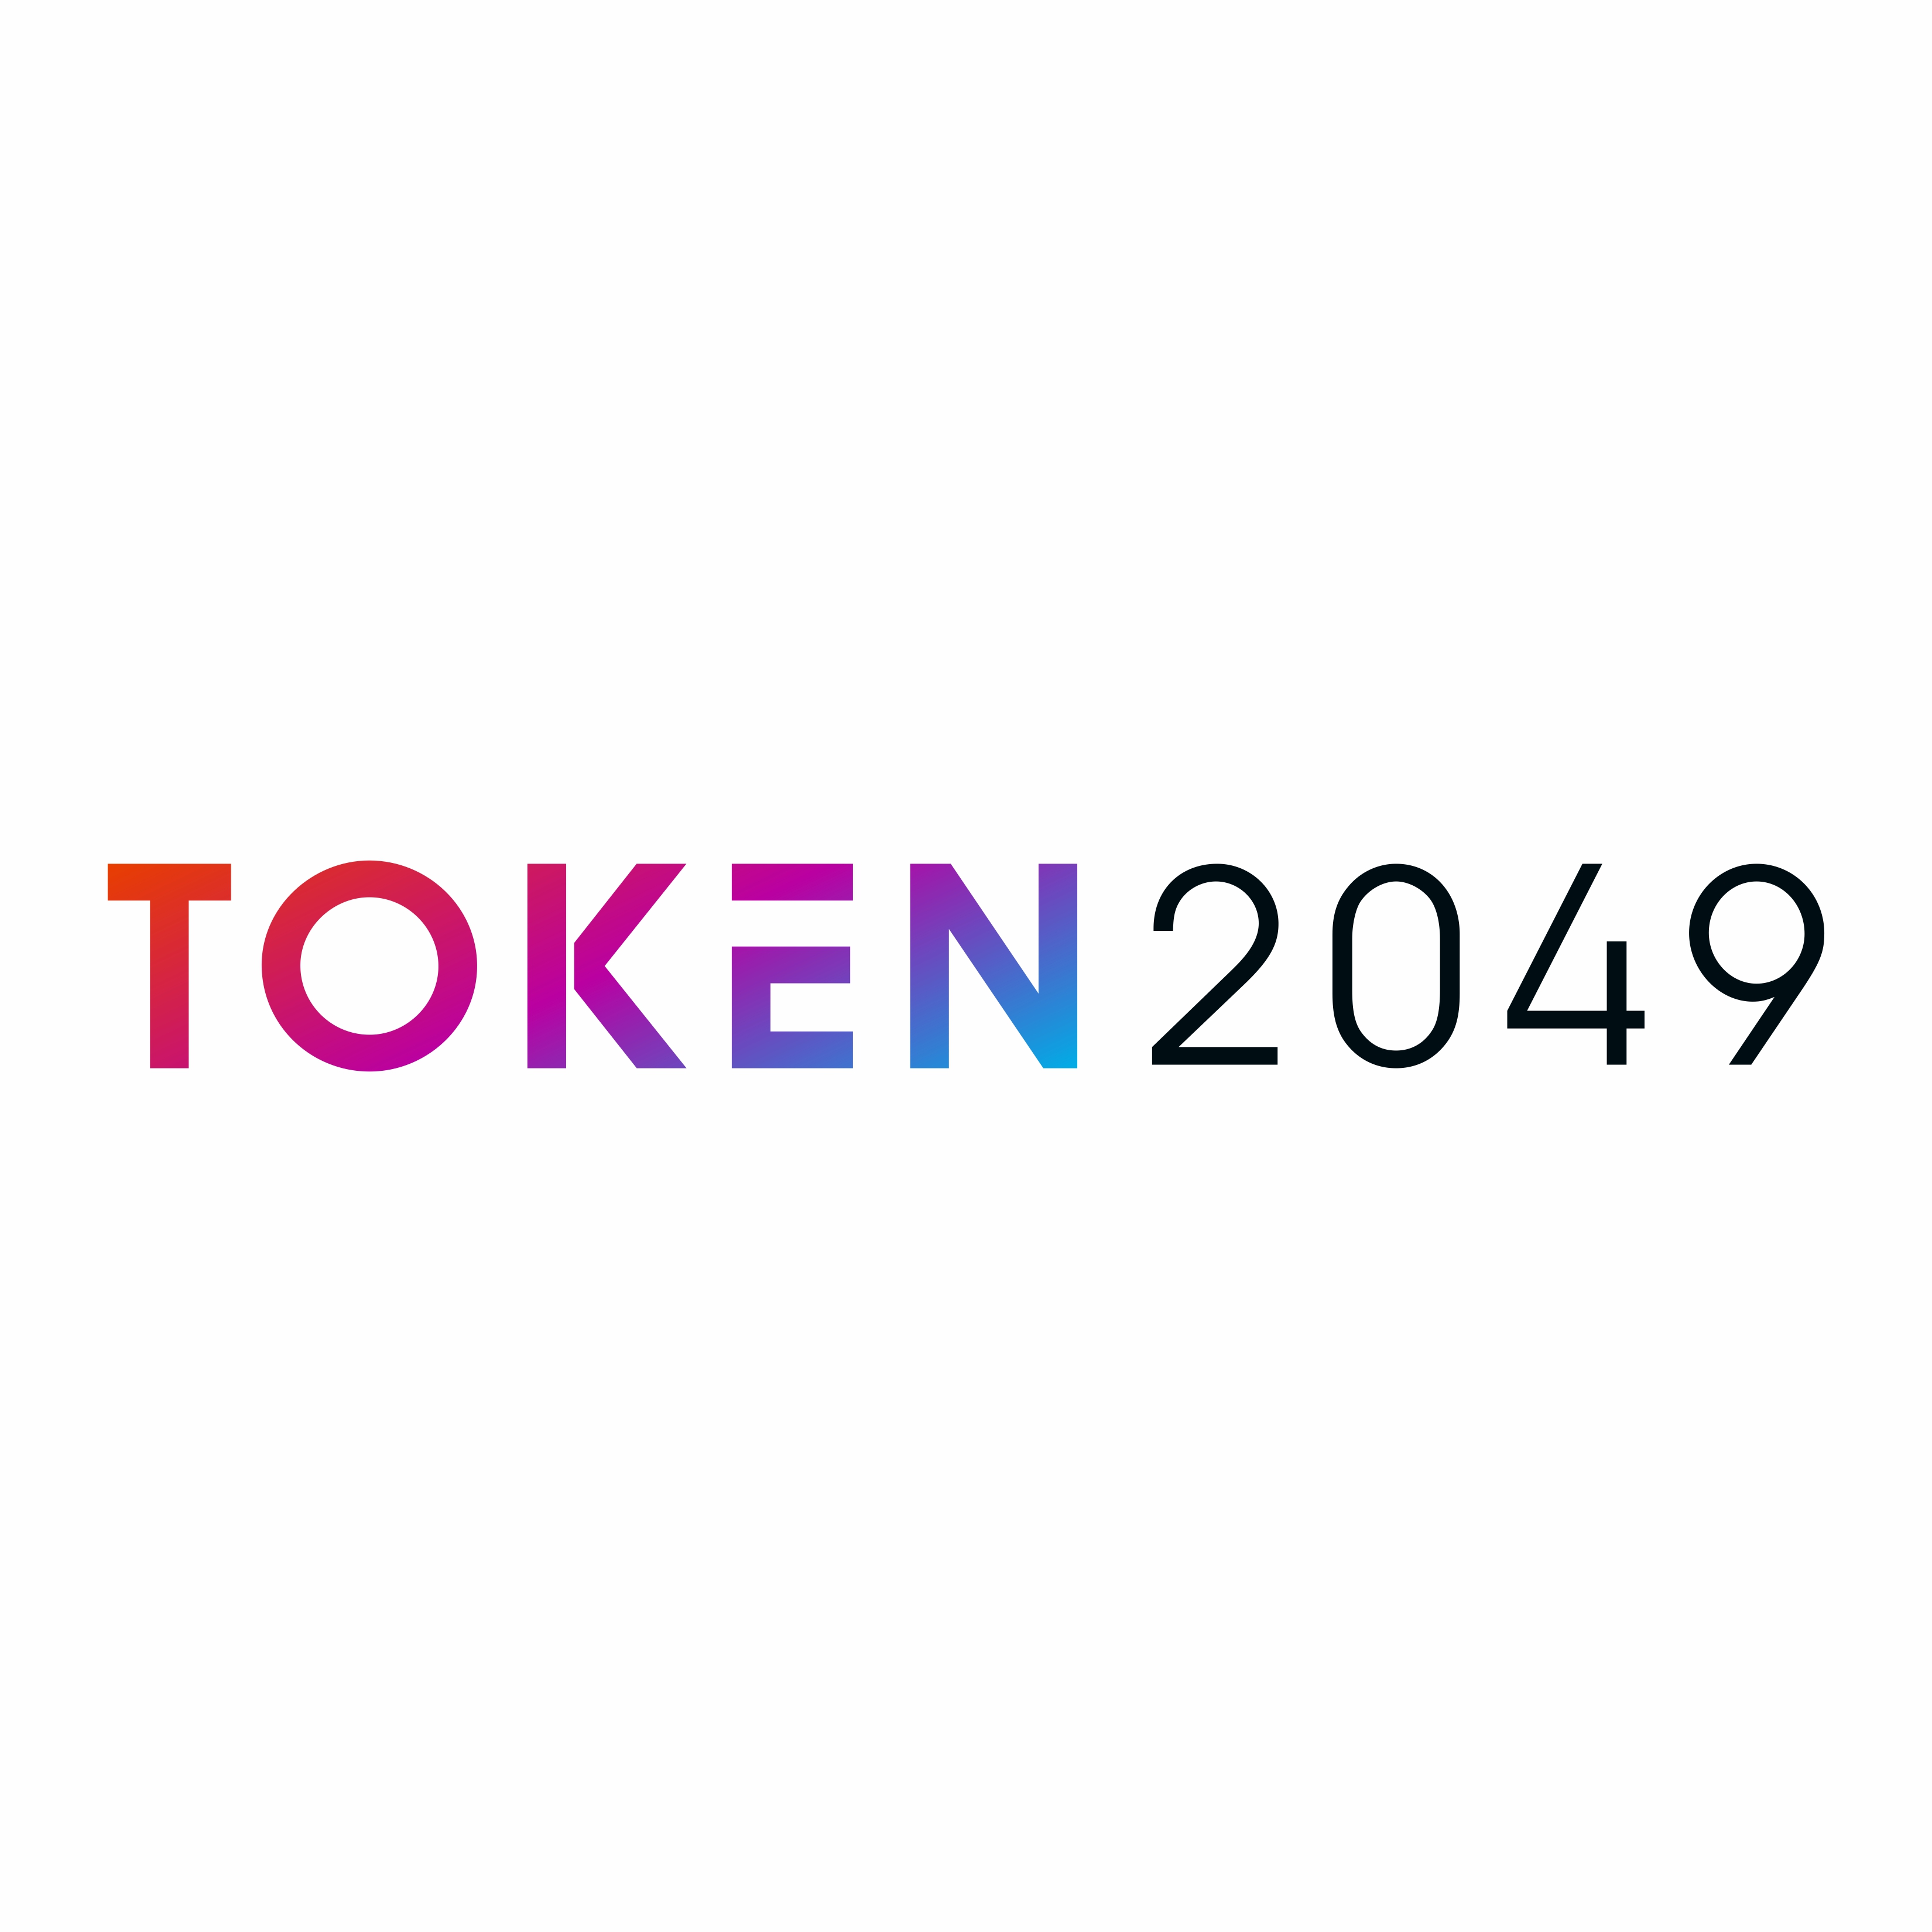 TOKEN2049 organized by TOKEN2049